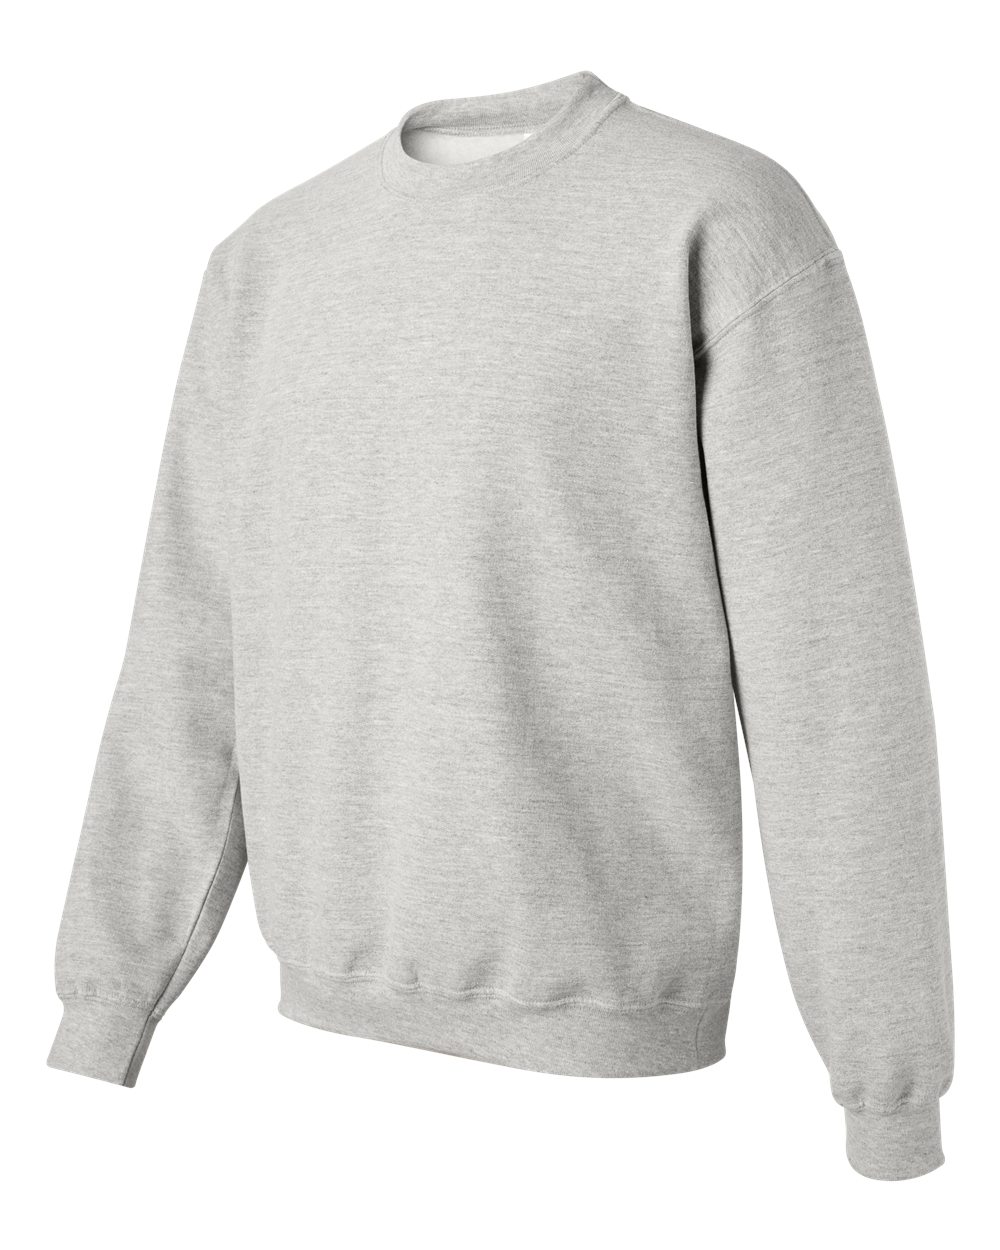 Gildan Heavy Blend Crew Neck sweater GI18000 Ash